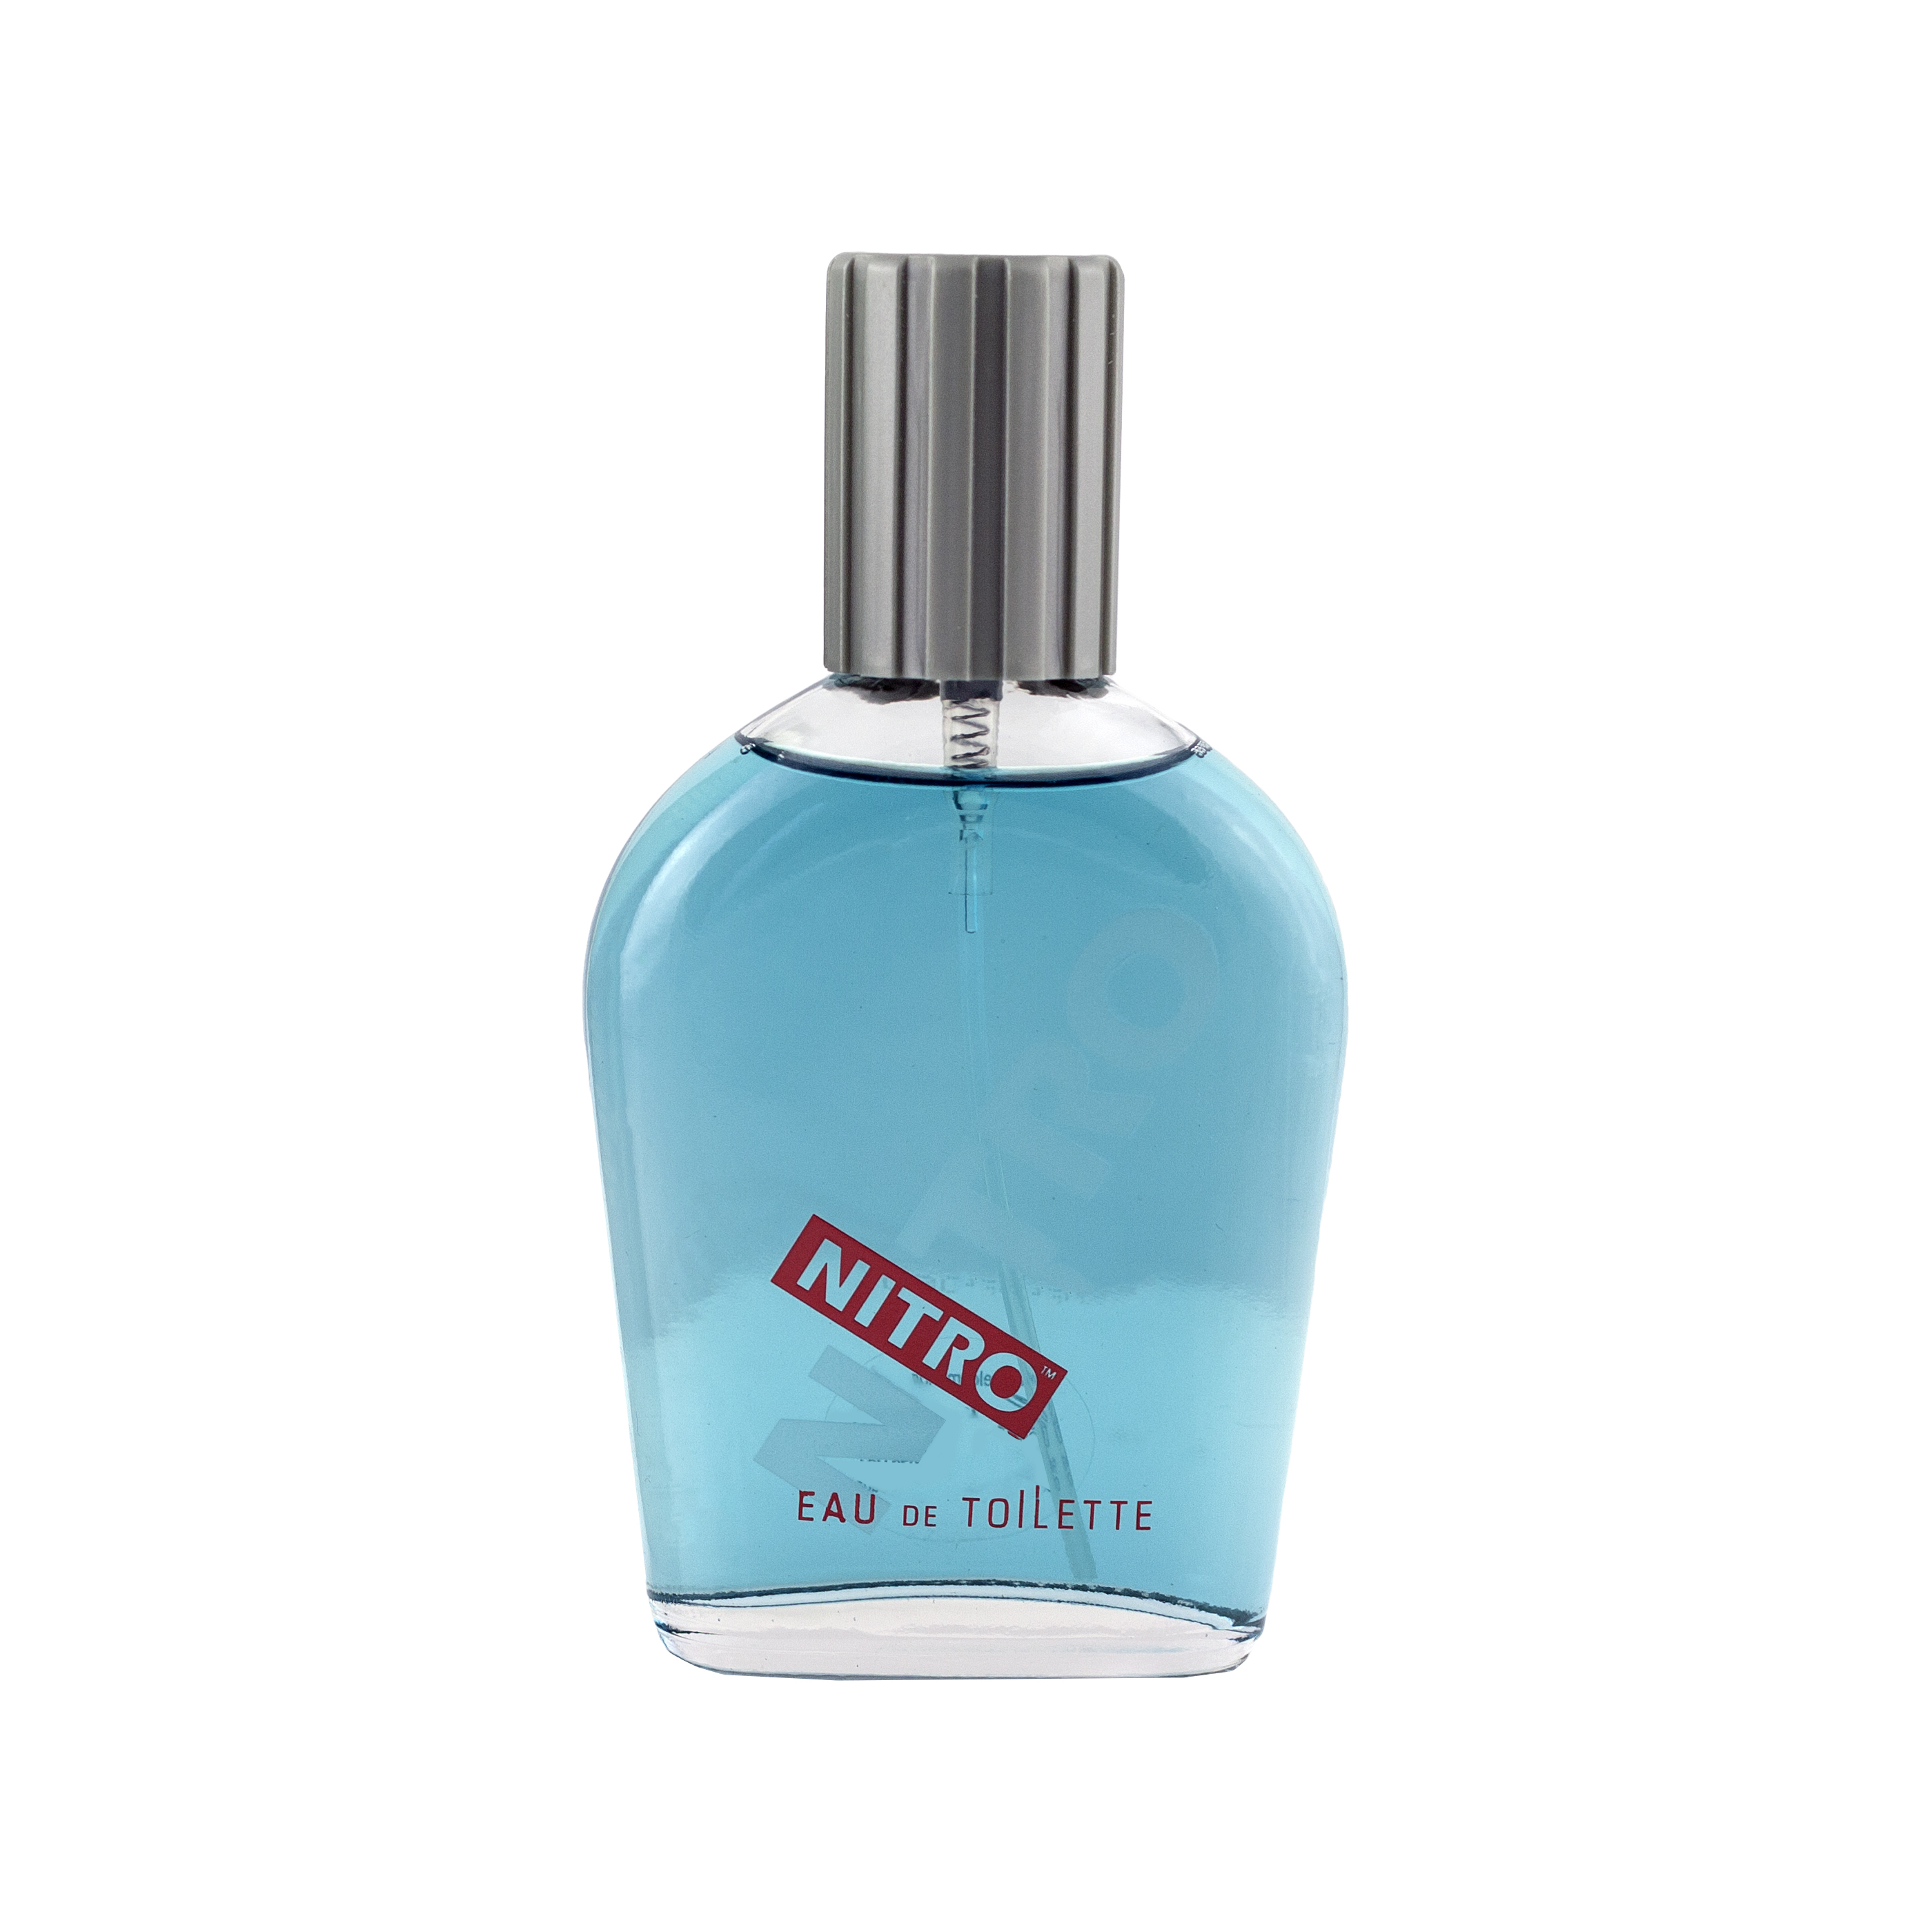 PB ParfumsBelcam Nitro version of Hugo, Eau De Toilette, Cologne for Men, 3.4 Fl oz - image 1 of 7